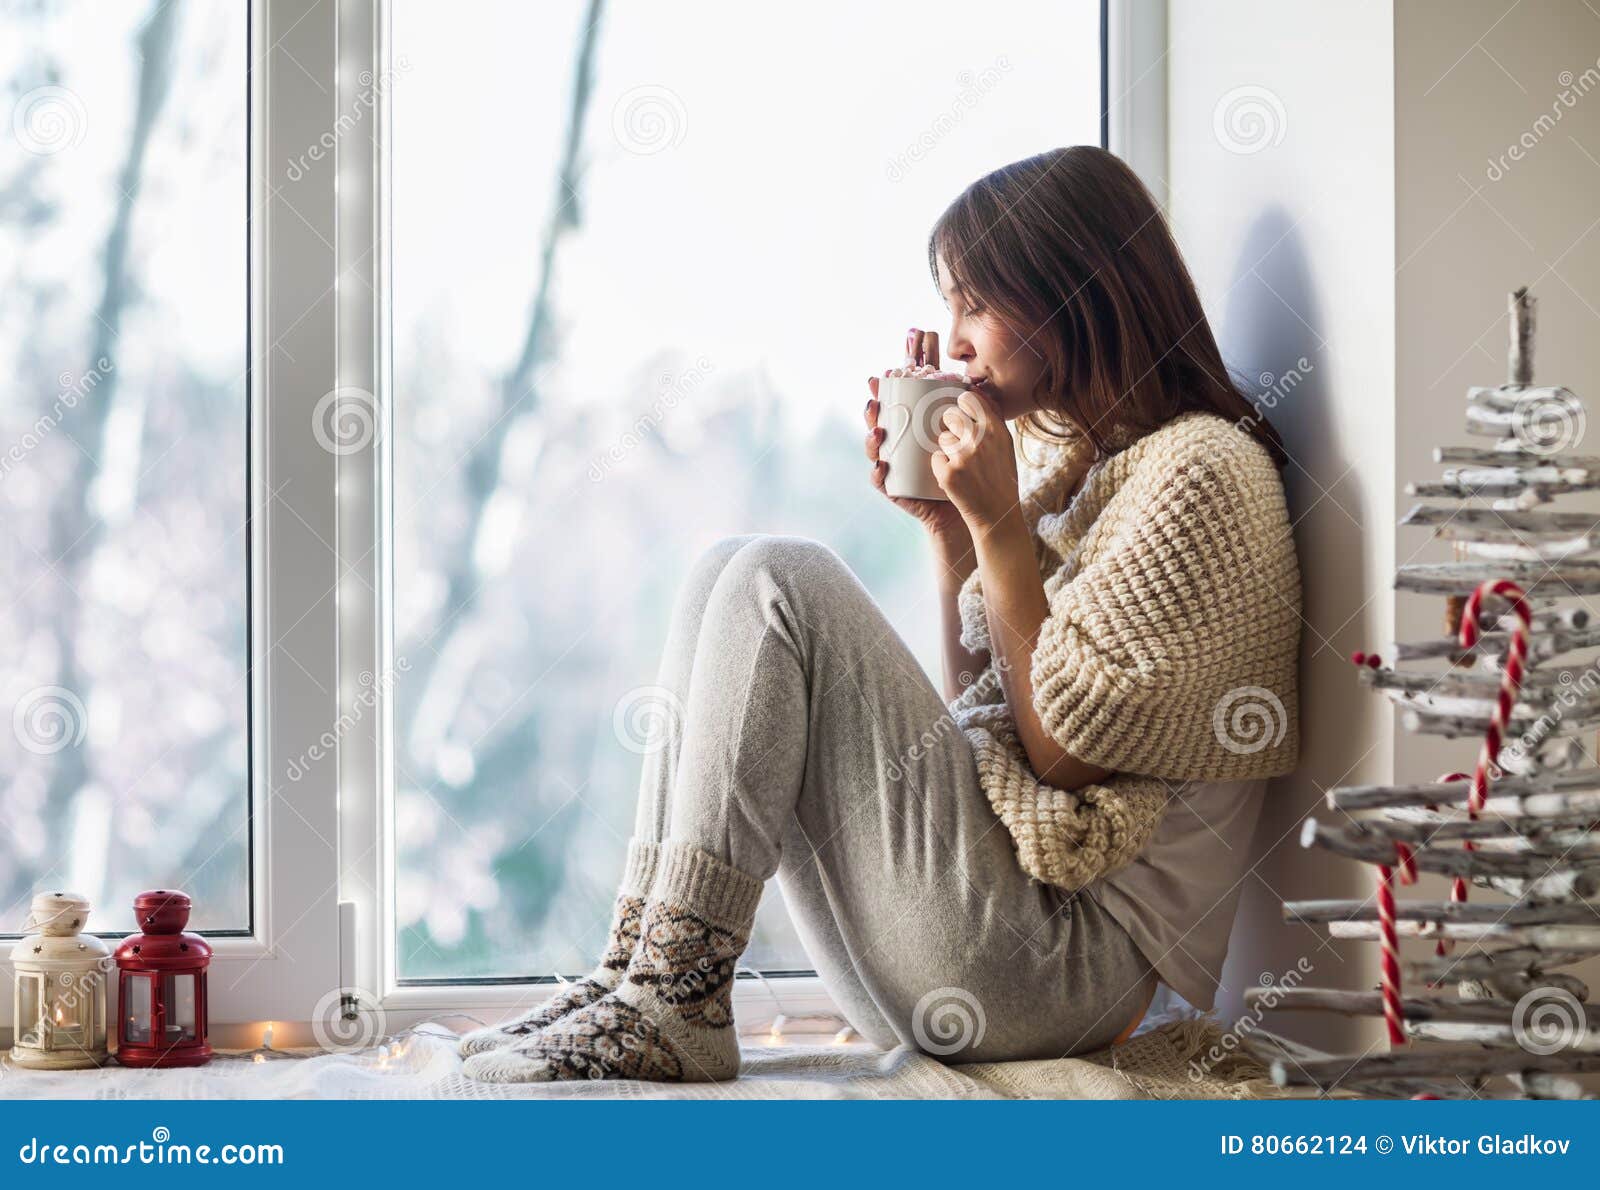 young beautiful woman drinking hot coffee sitting on window sill